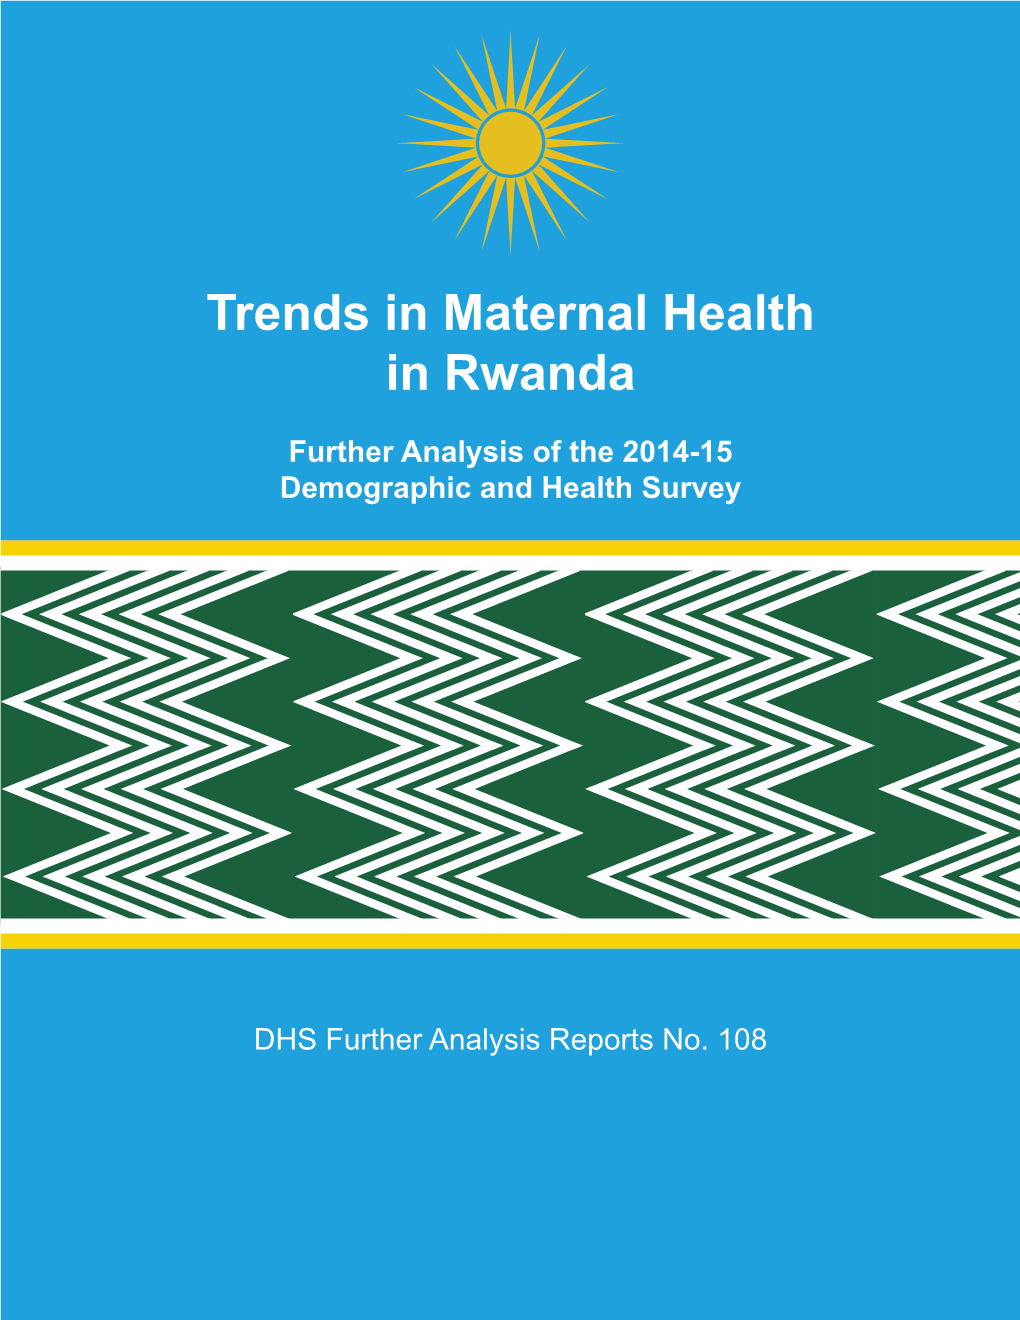 Trends in Maternal Health in Rwanda [FA108]